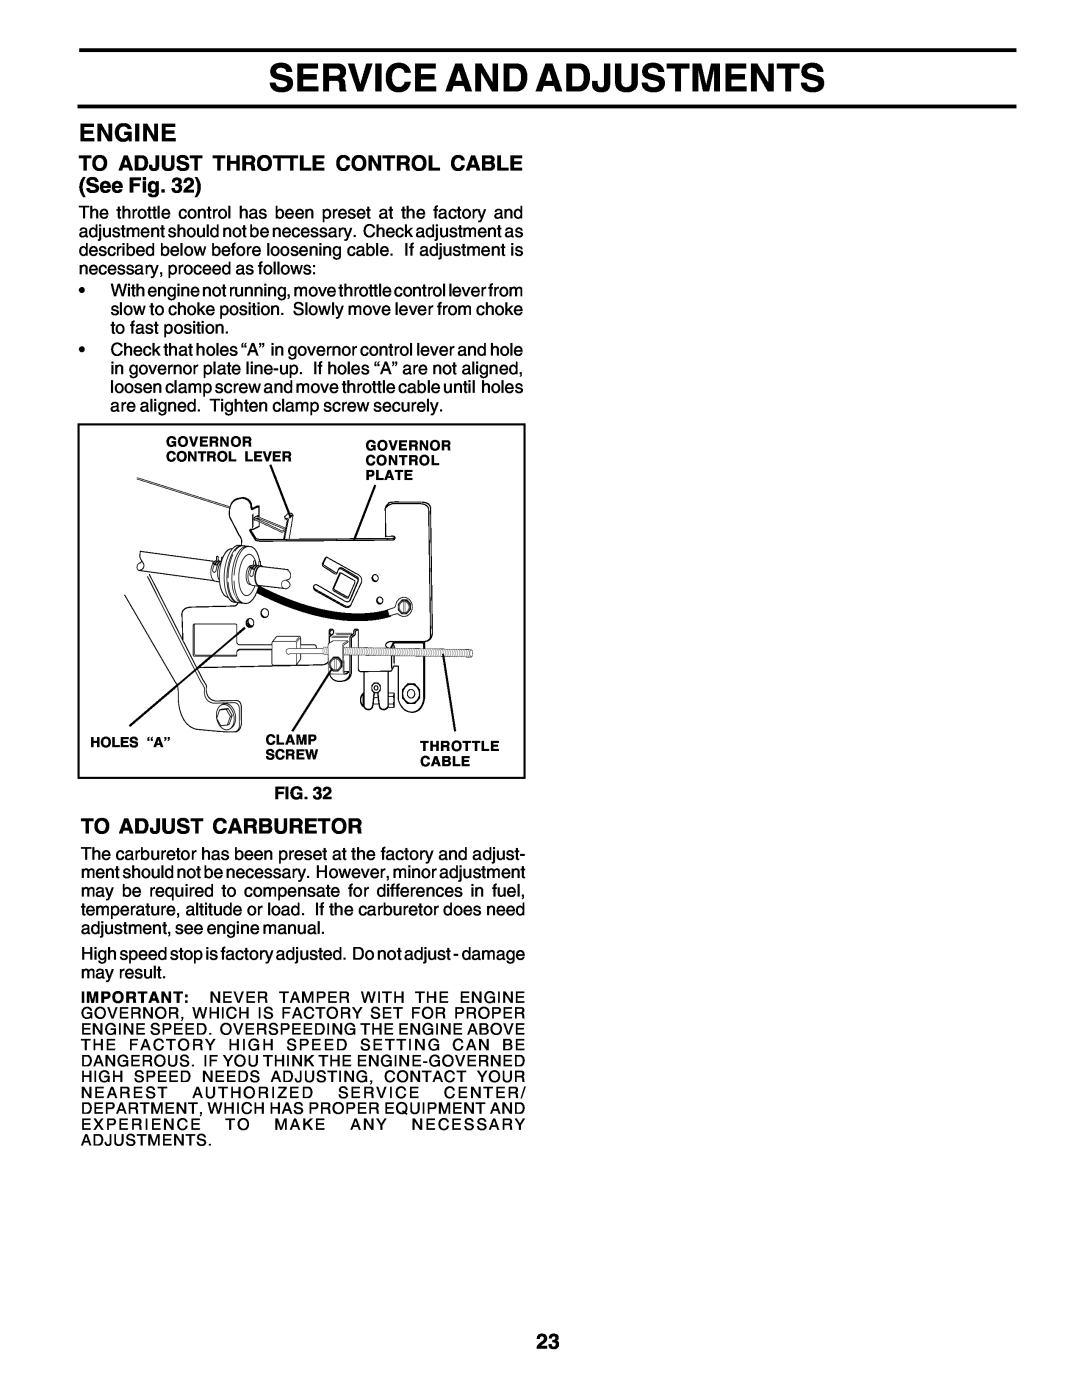 Poulan 180198 owner manual TO ADJUST THROTTLE CONTROL CABLE See Fig, To Adjust Carburetor, Service And Adjustments, Engine 